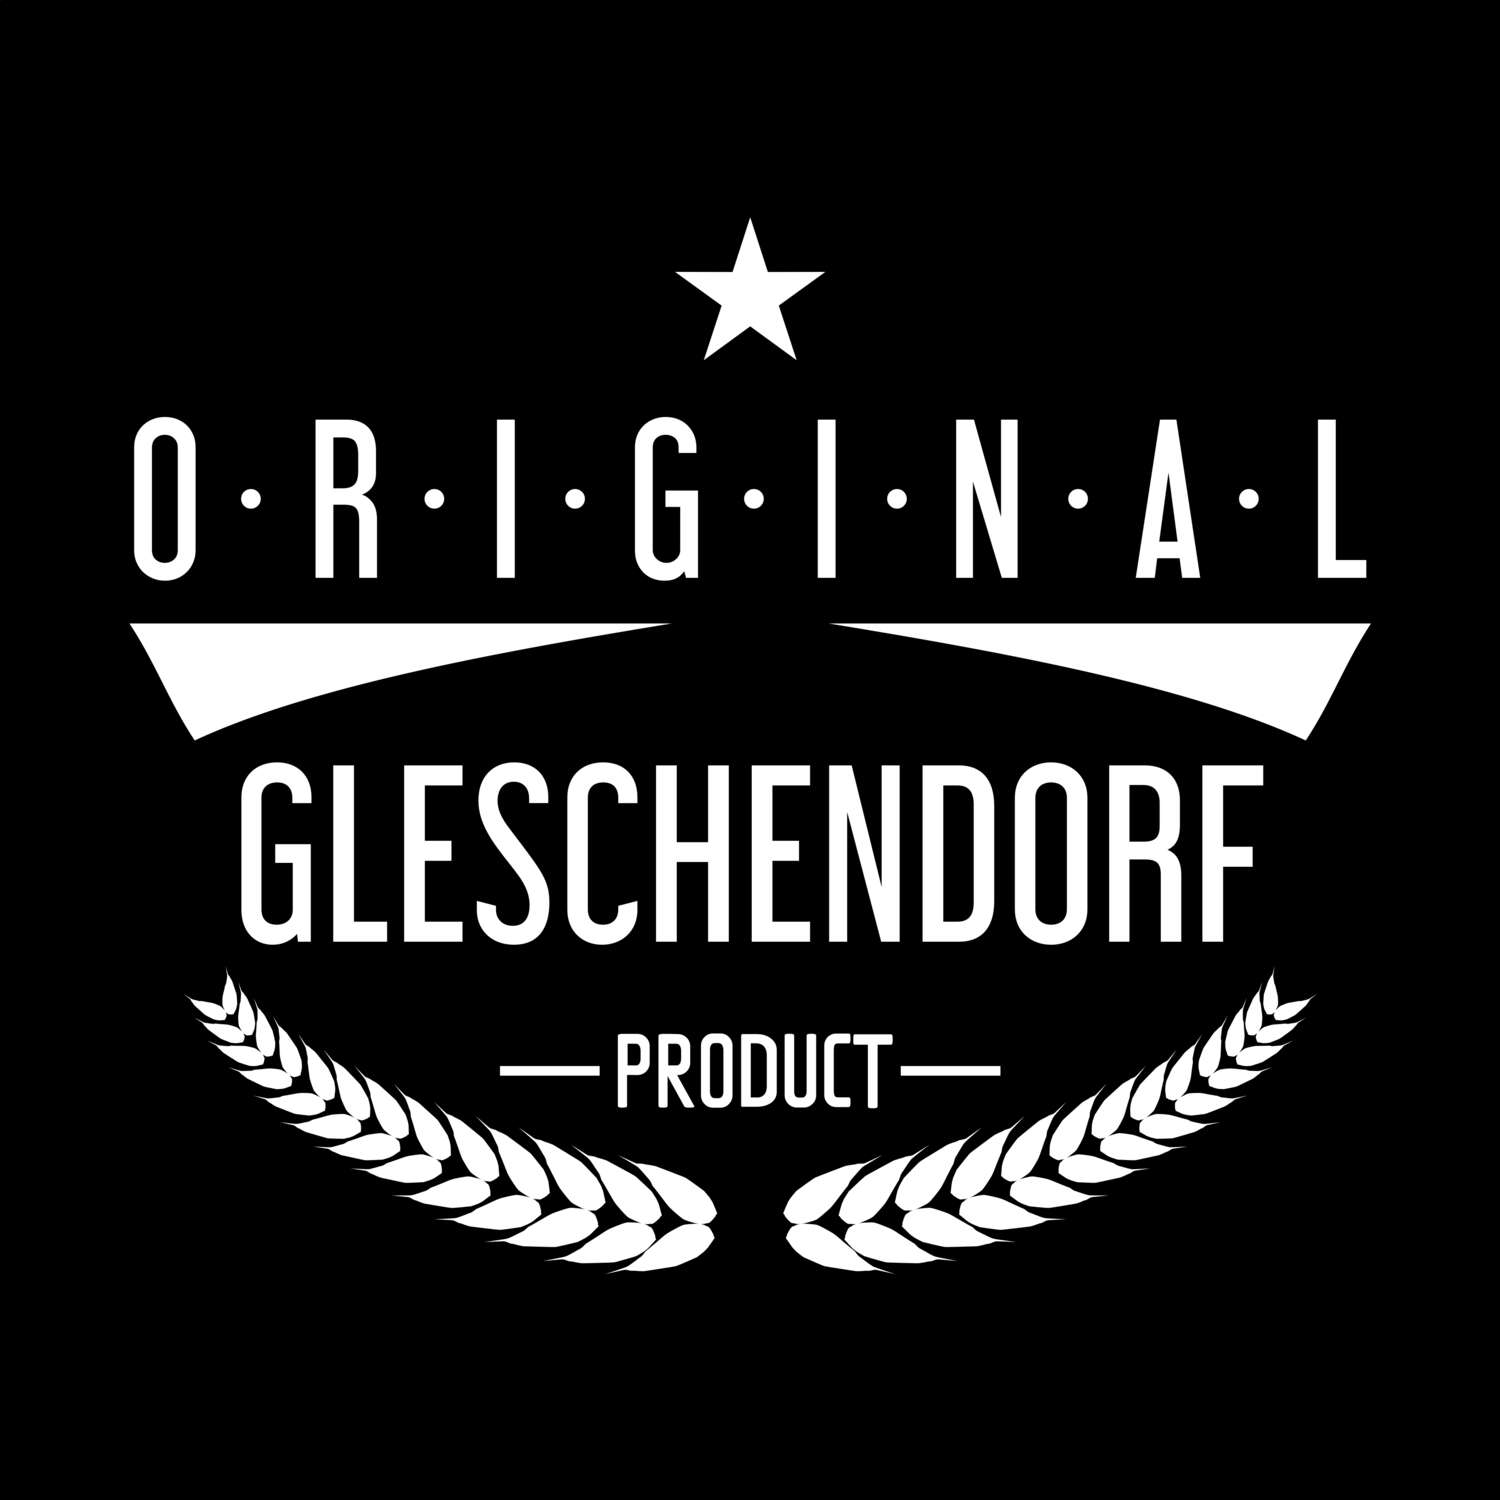 Gleschendorf T-Shirt »Original Product«